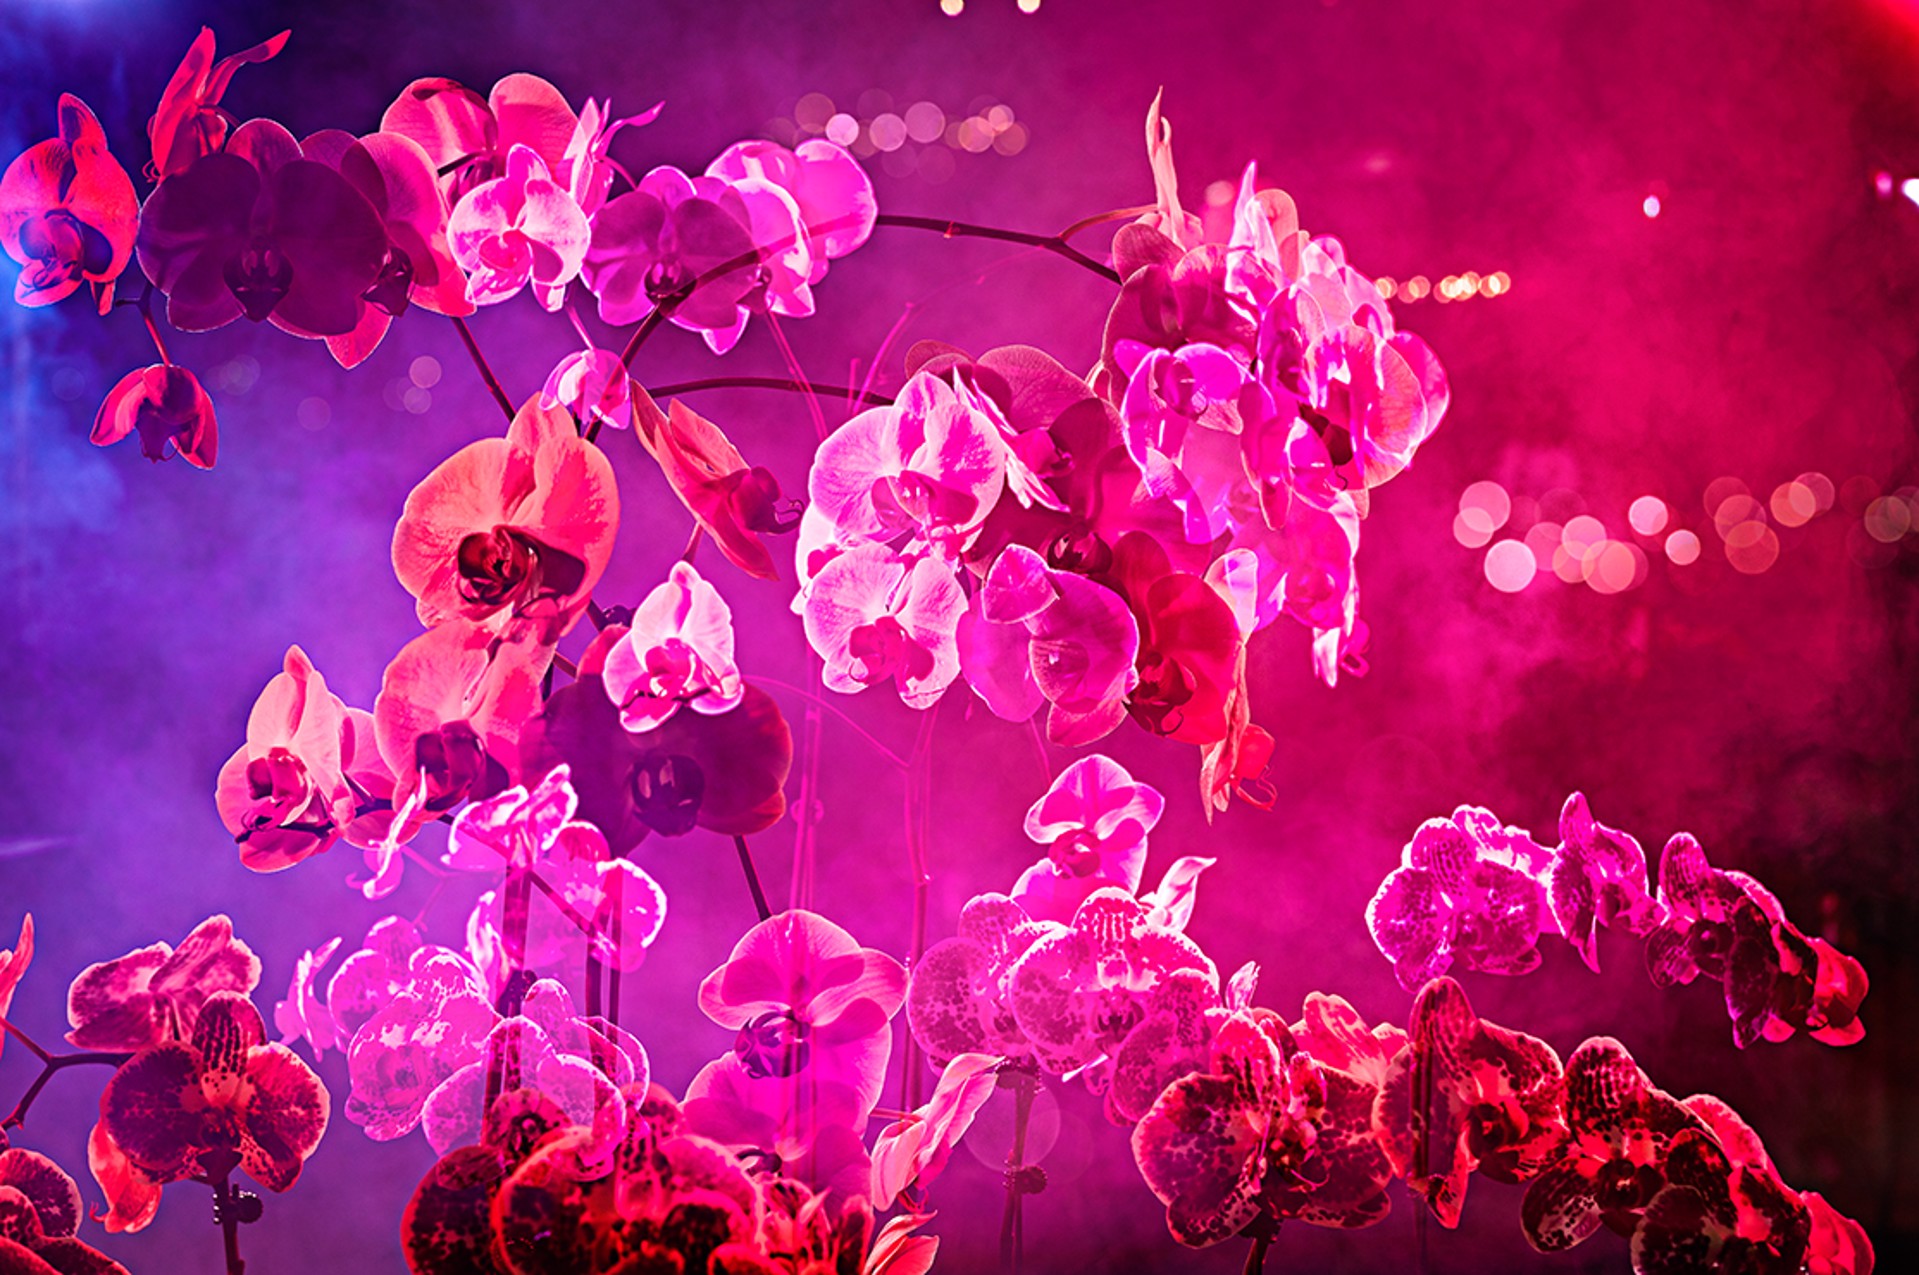 Smokey Orchids by David Drebin